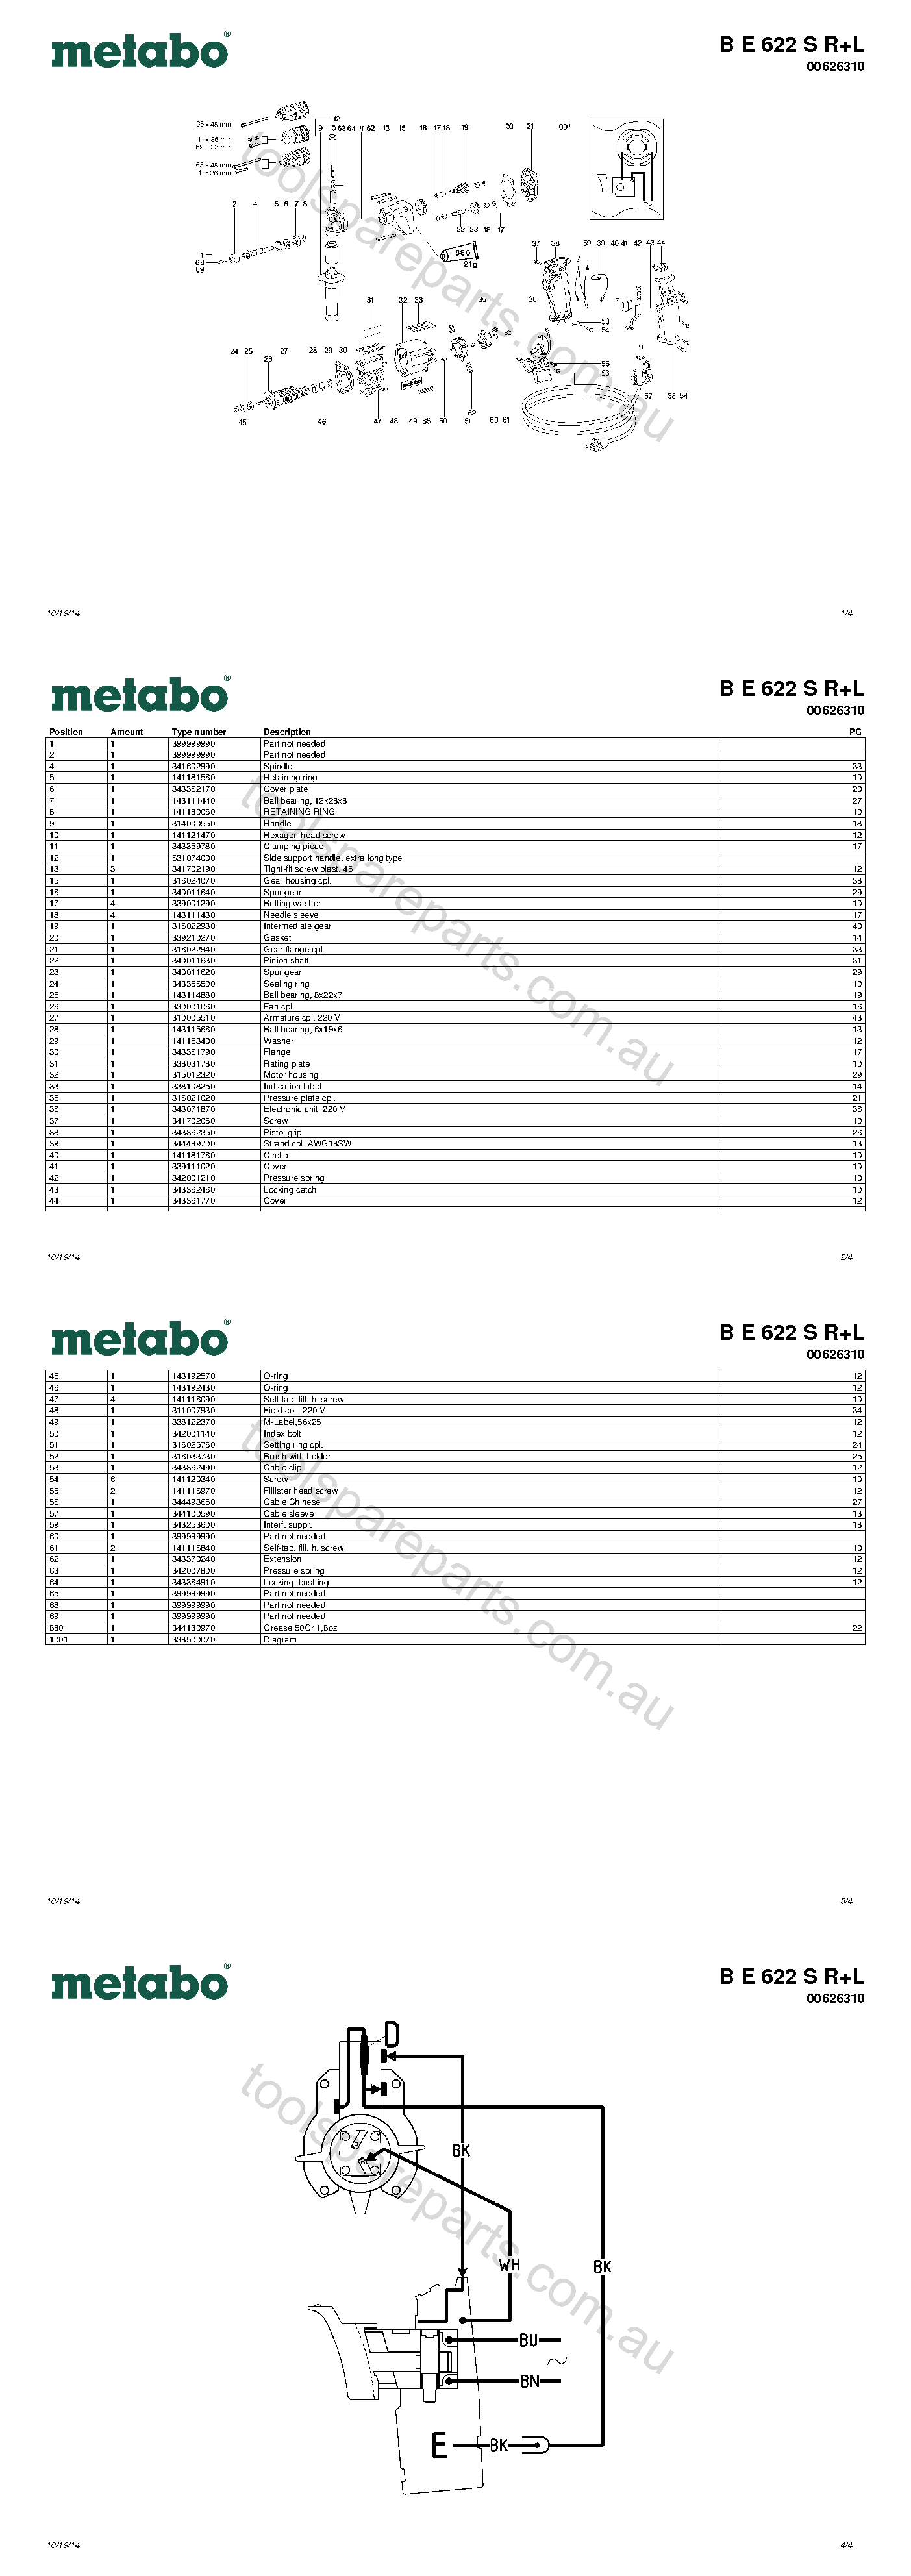 Metabo B E 622 S R+L 00626310  Diagram 1